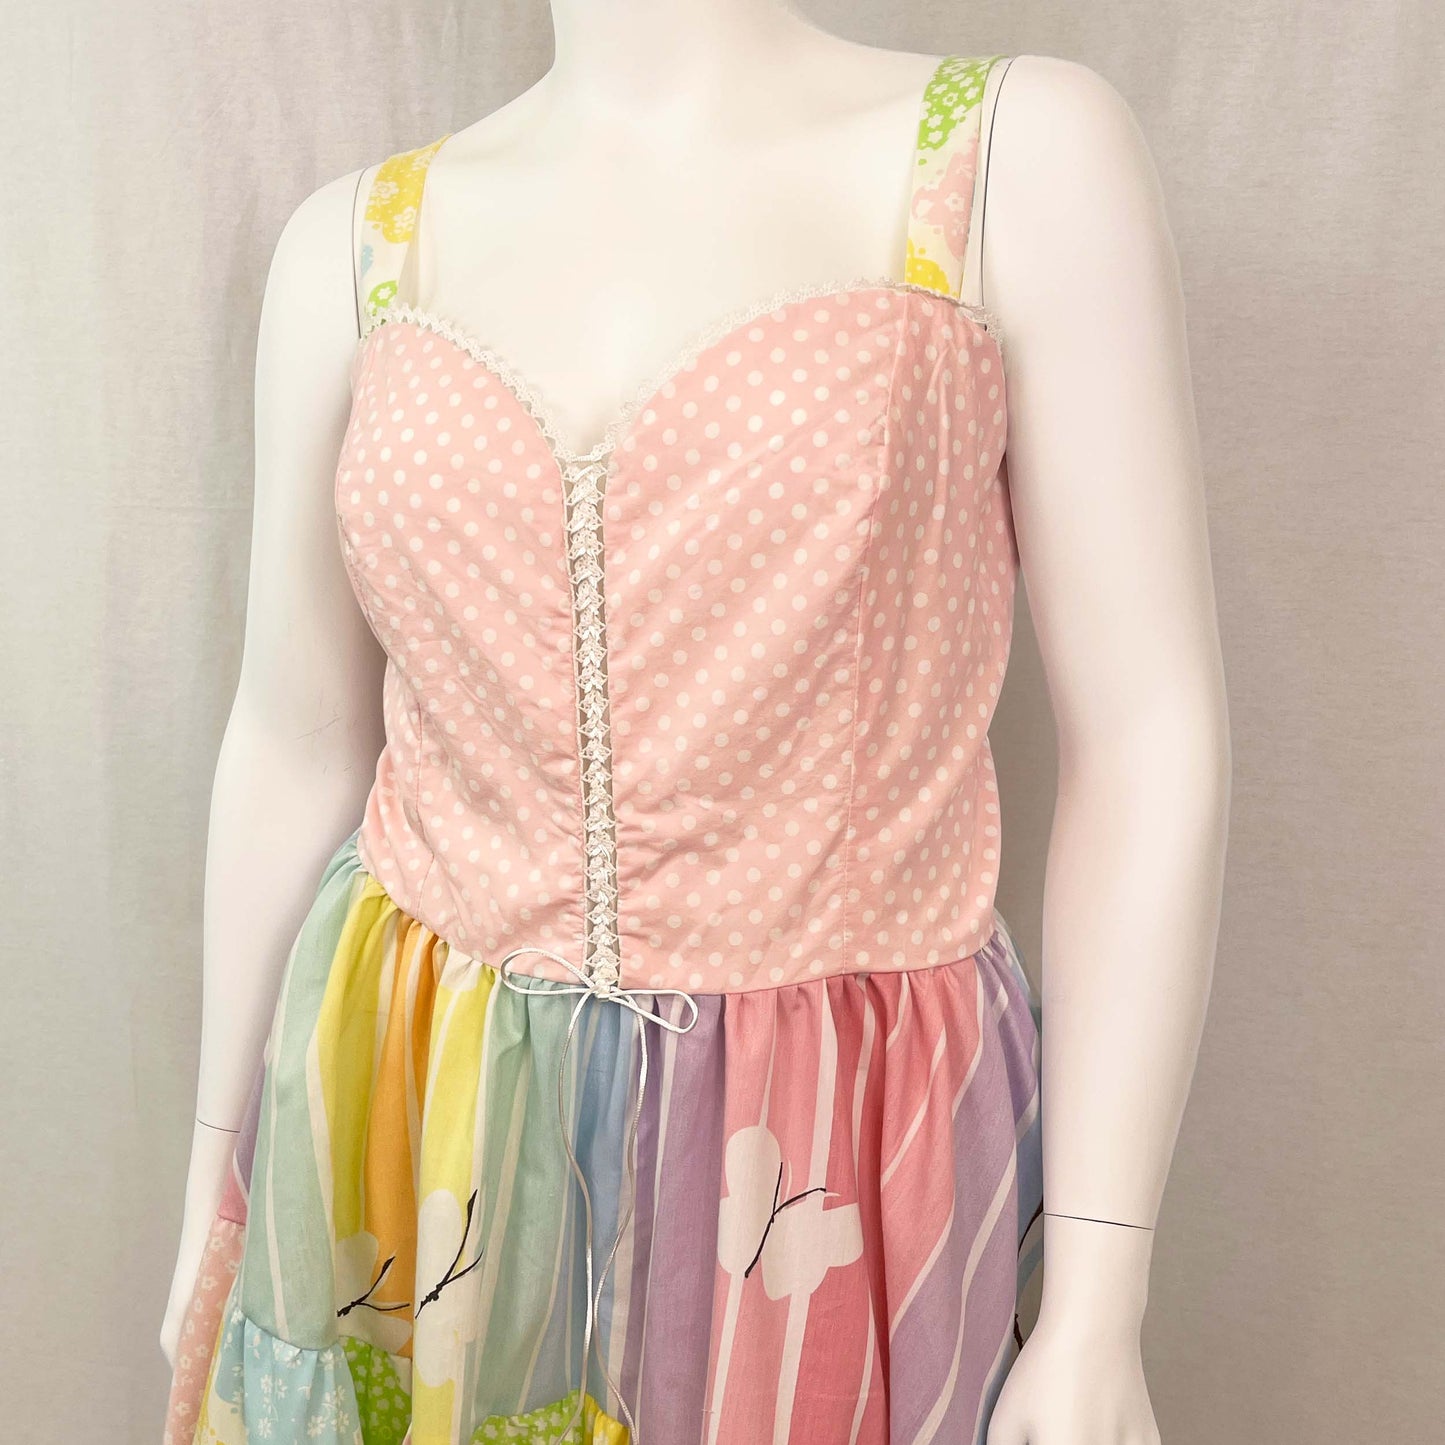 Picnic Sundress w/ Tiered Skirt (Size XXL)